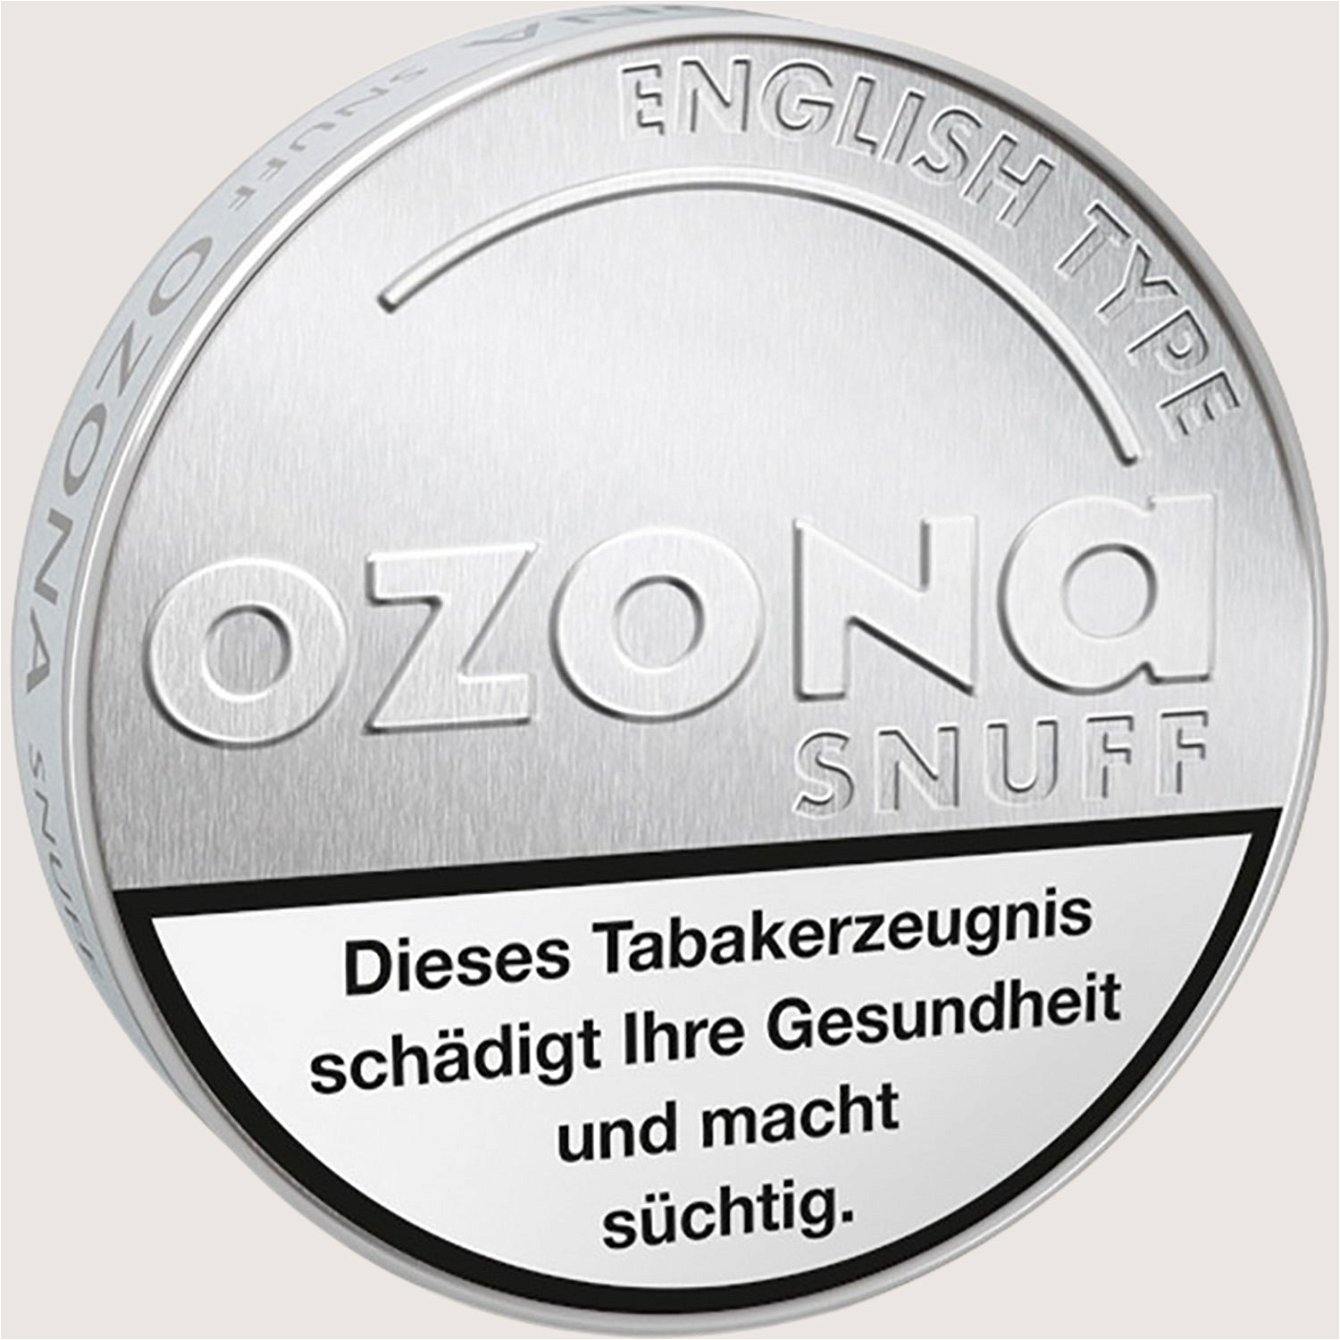 Pöschl Ozona English Type Snuff